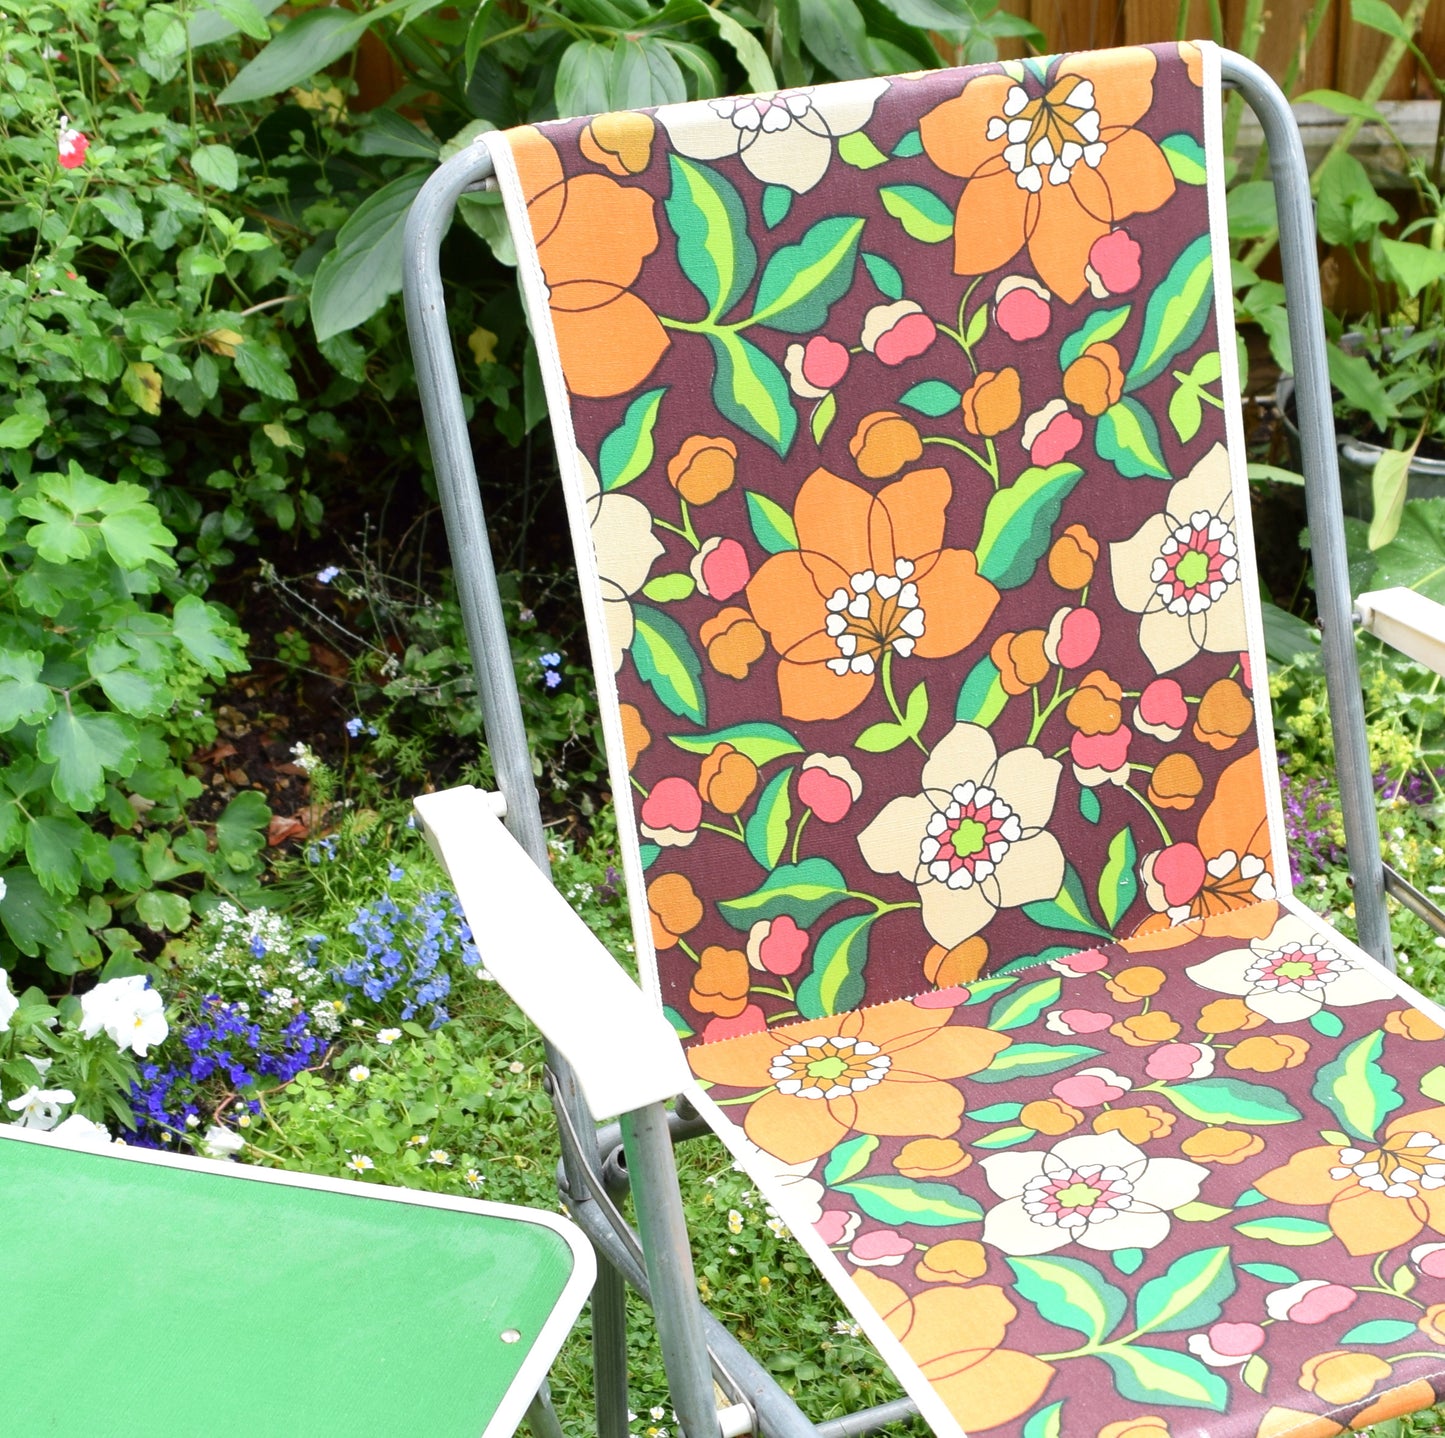 Vintage 1960s Folding Garden Chair & Table - Flower Power - Green & Orange